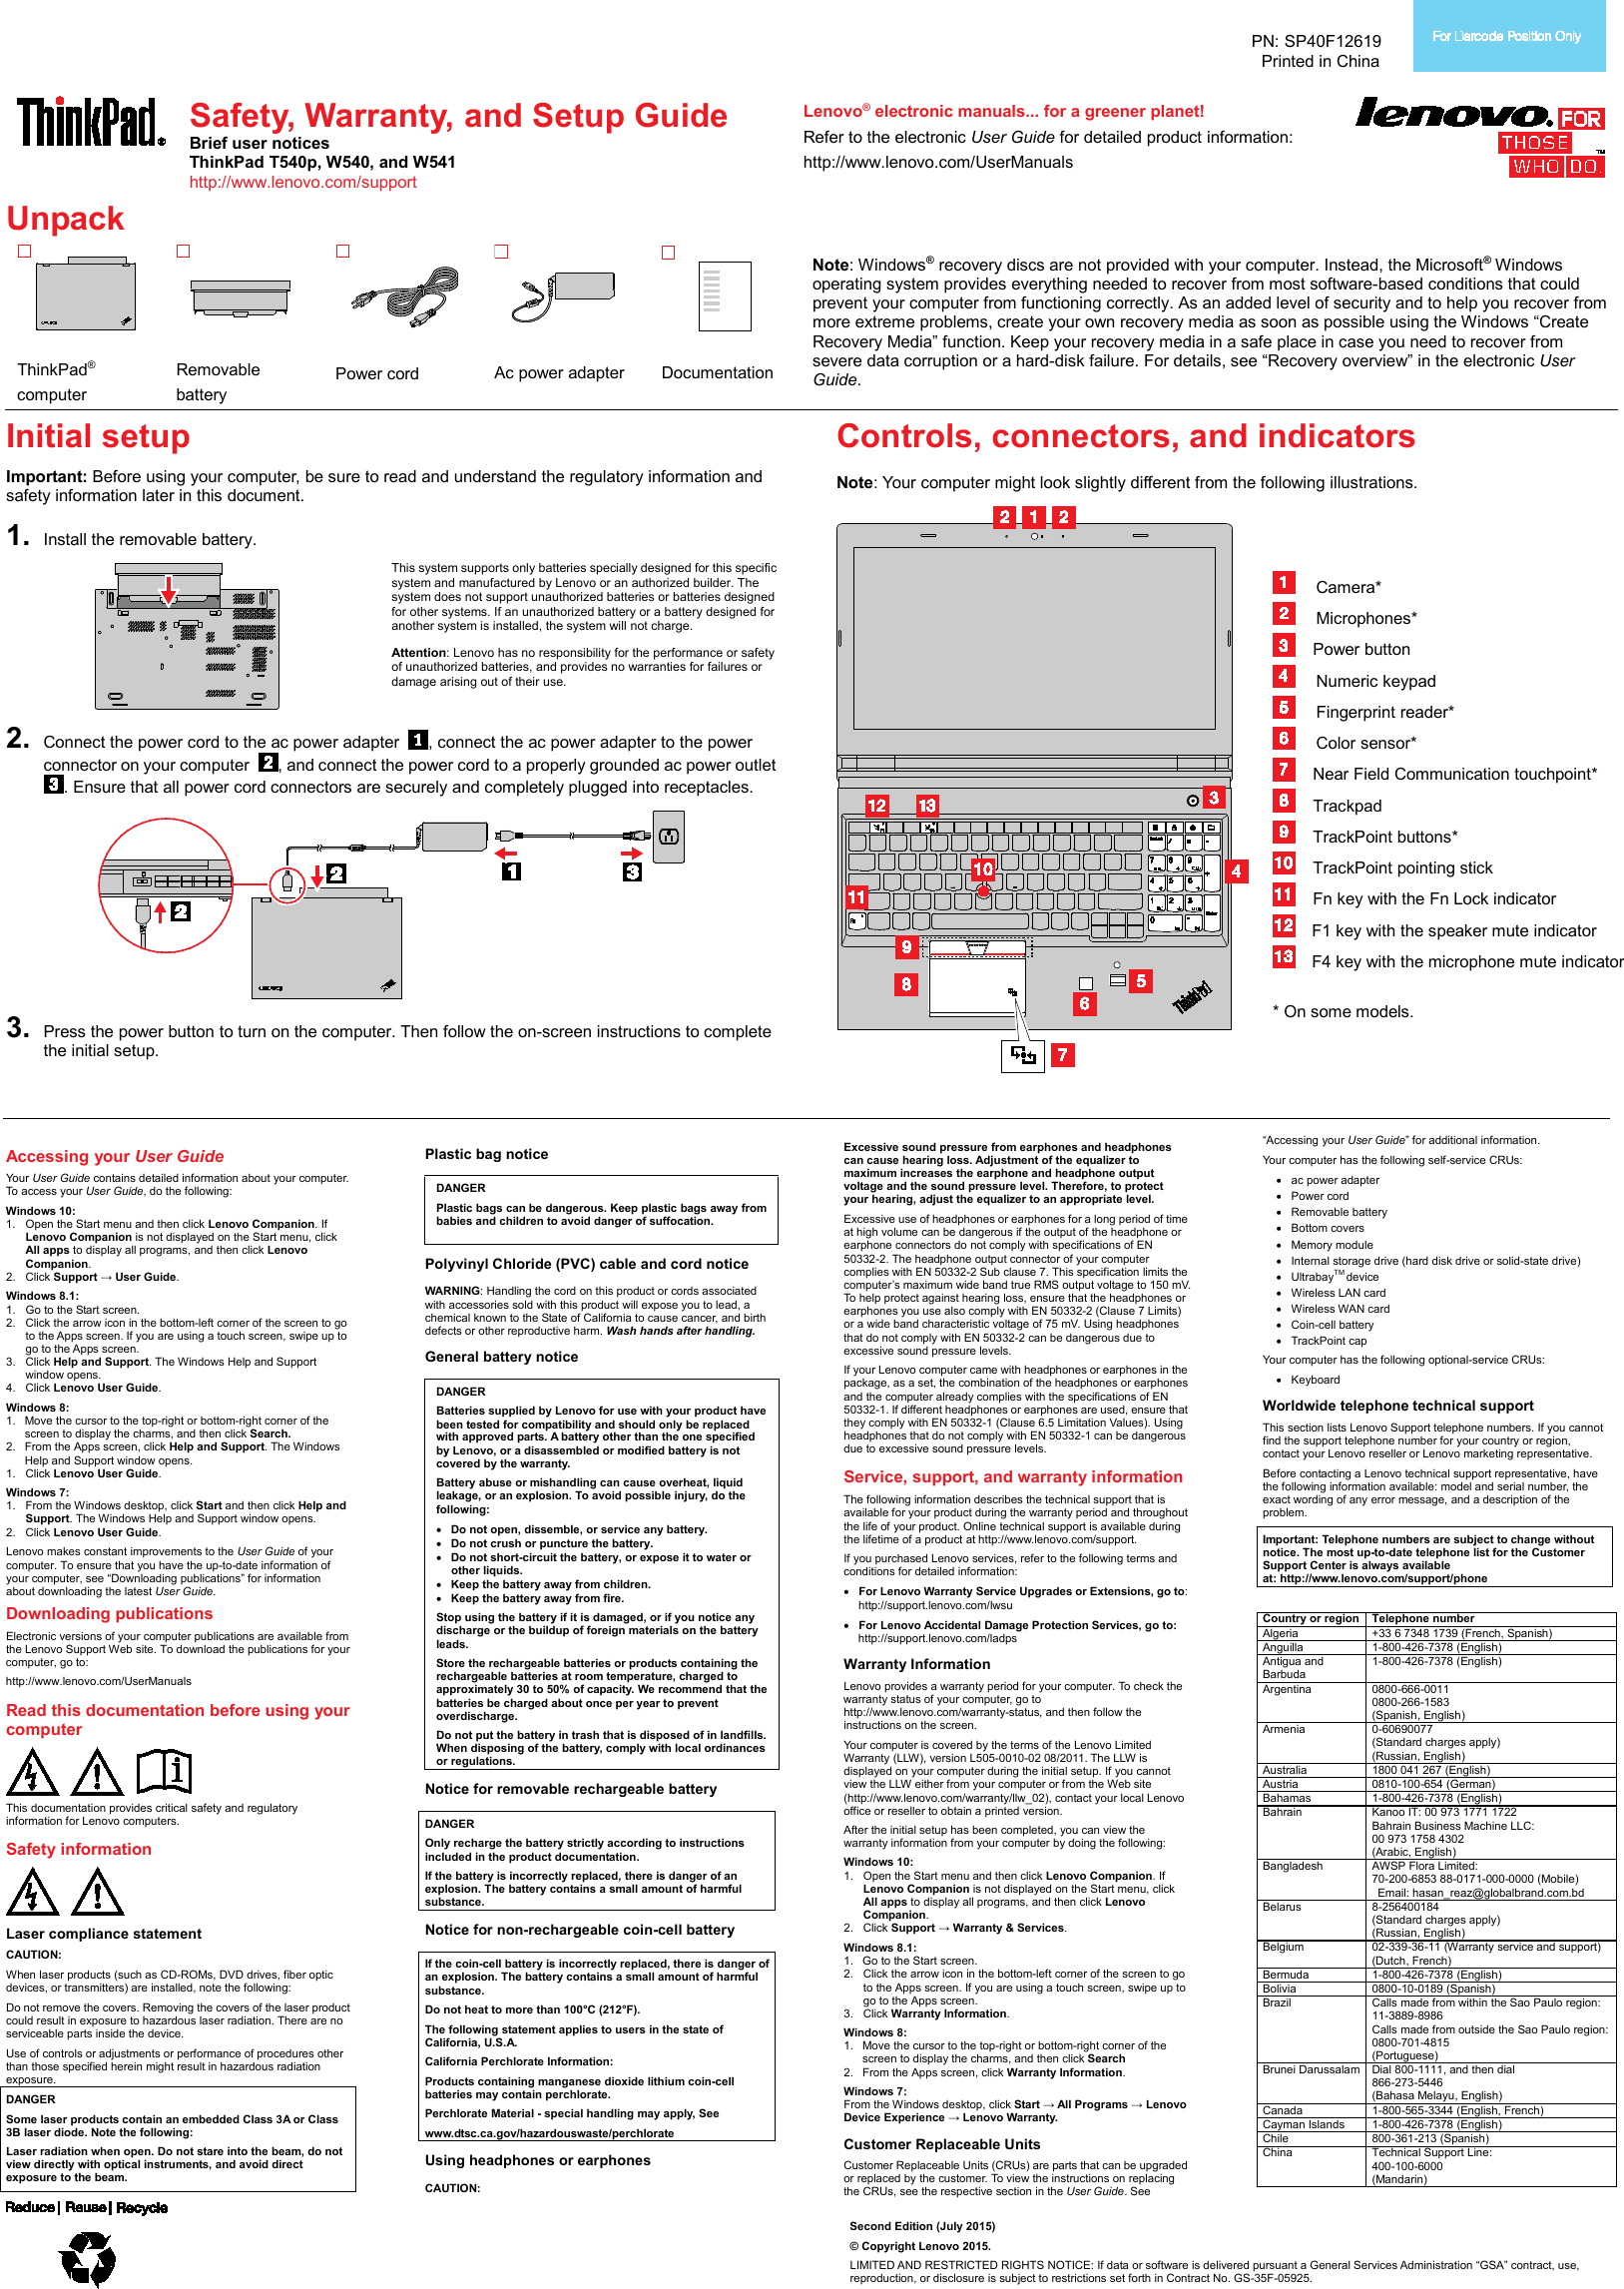 Lenovo thinkpad t540p pdf ipad 4 retina display commercial